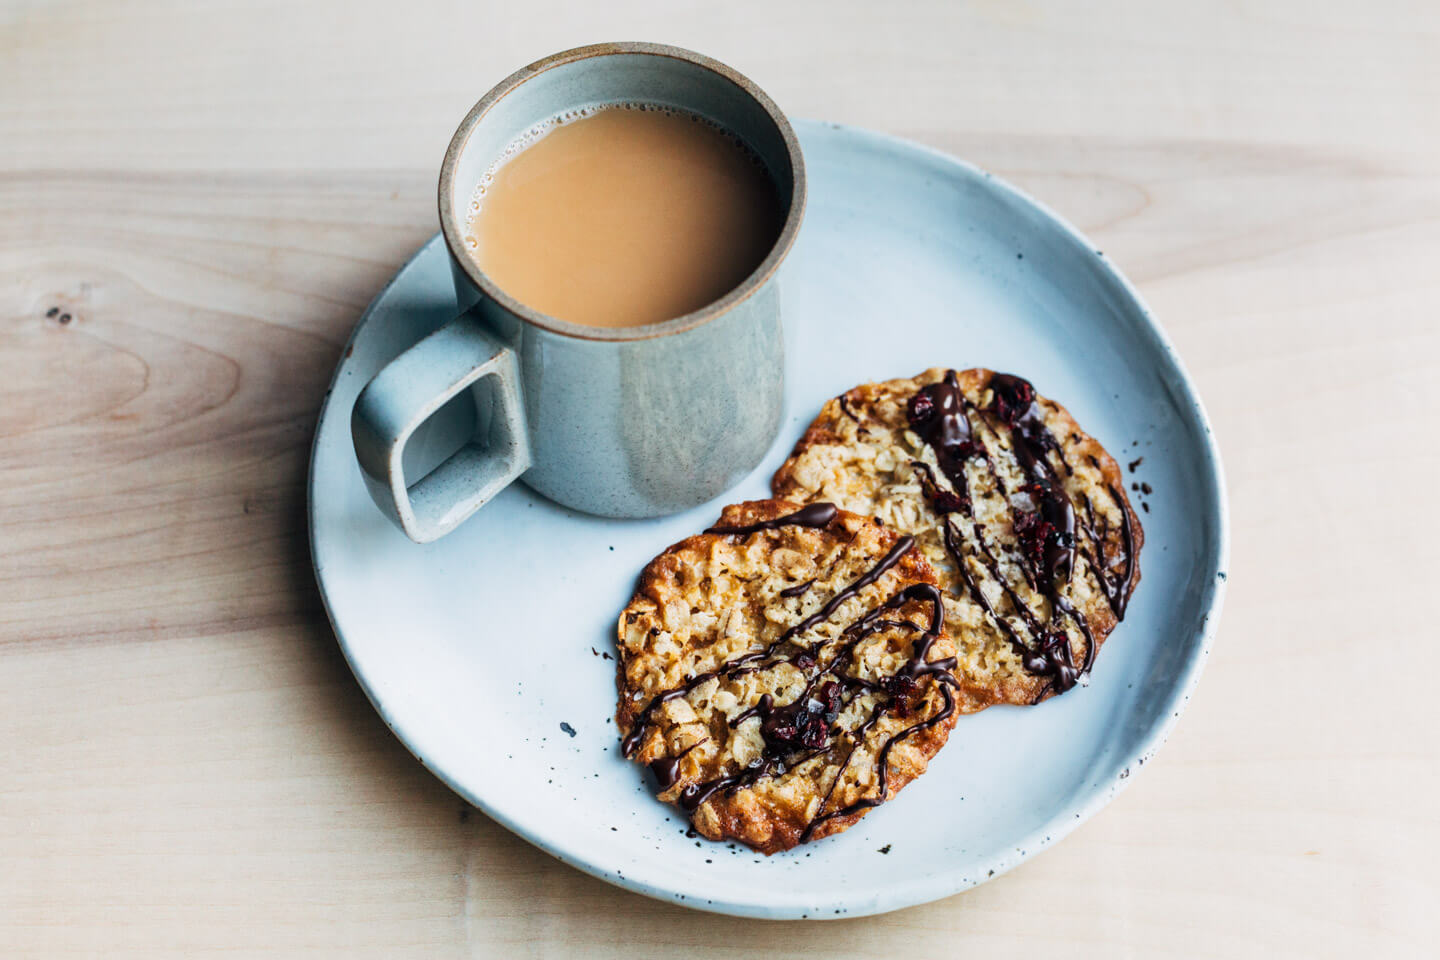 A mug of tea and two cookies on a plate